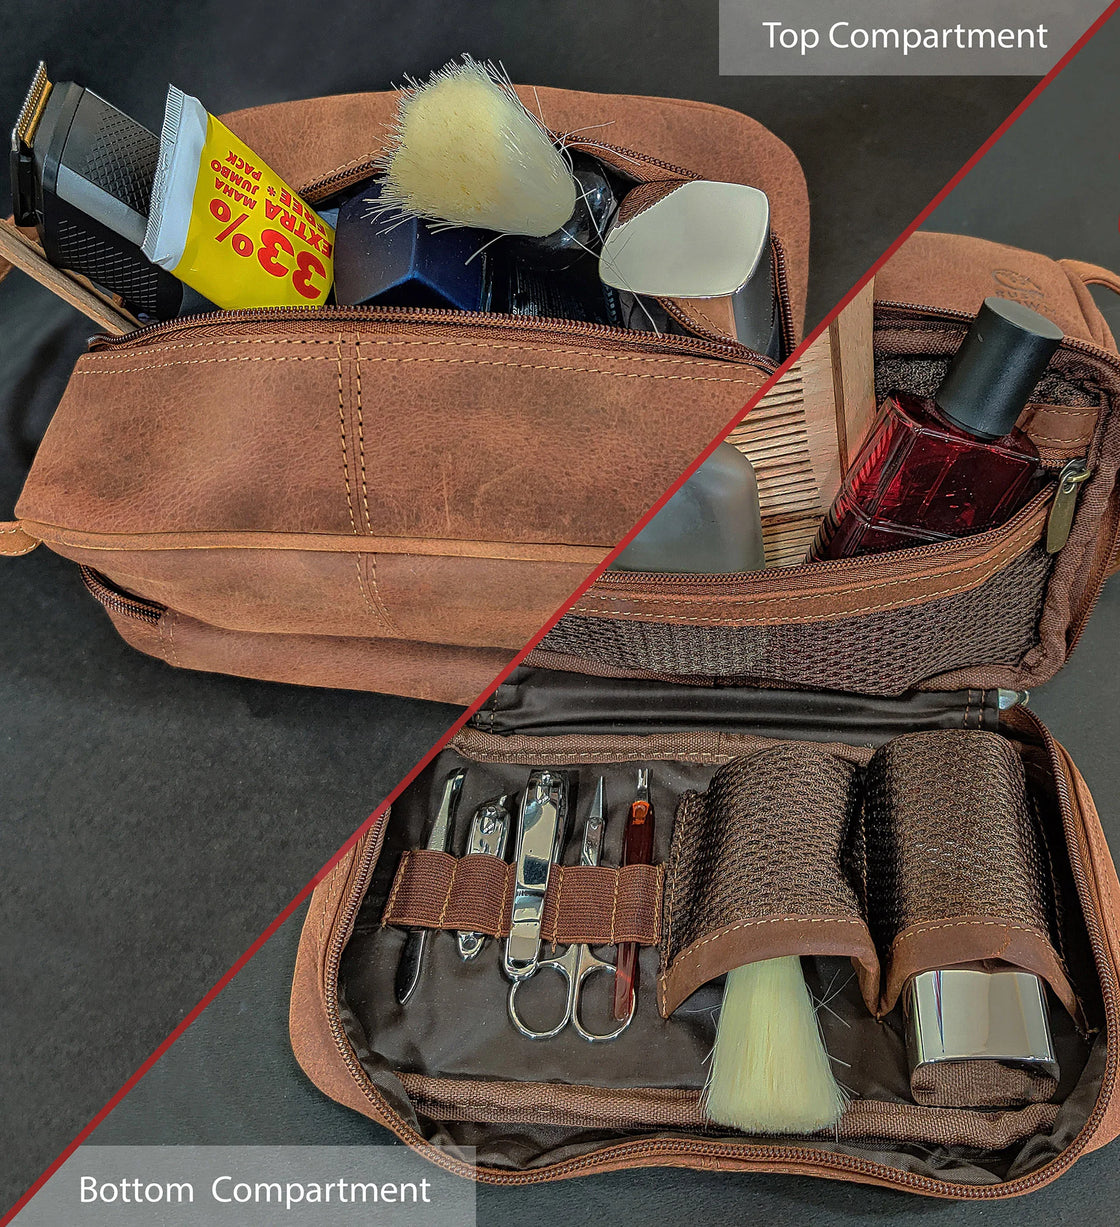 ZAUKNYA Makeup Bag - Large Capacity Travel Cosmetic Bag, Portable Leather  Waterproof Women Travel Makeup Bag Organizer, with Handle and Divider Flat